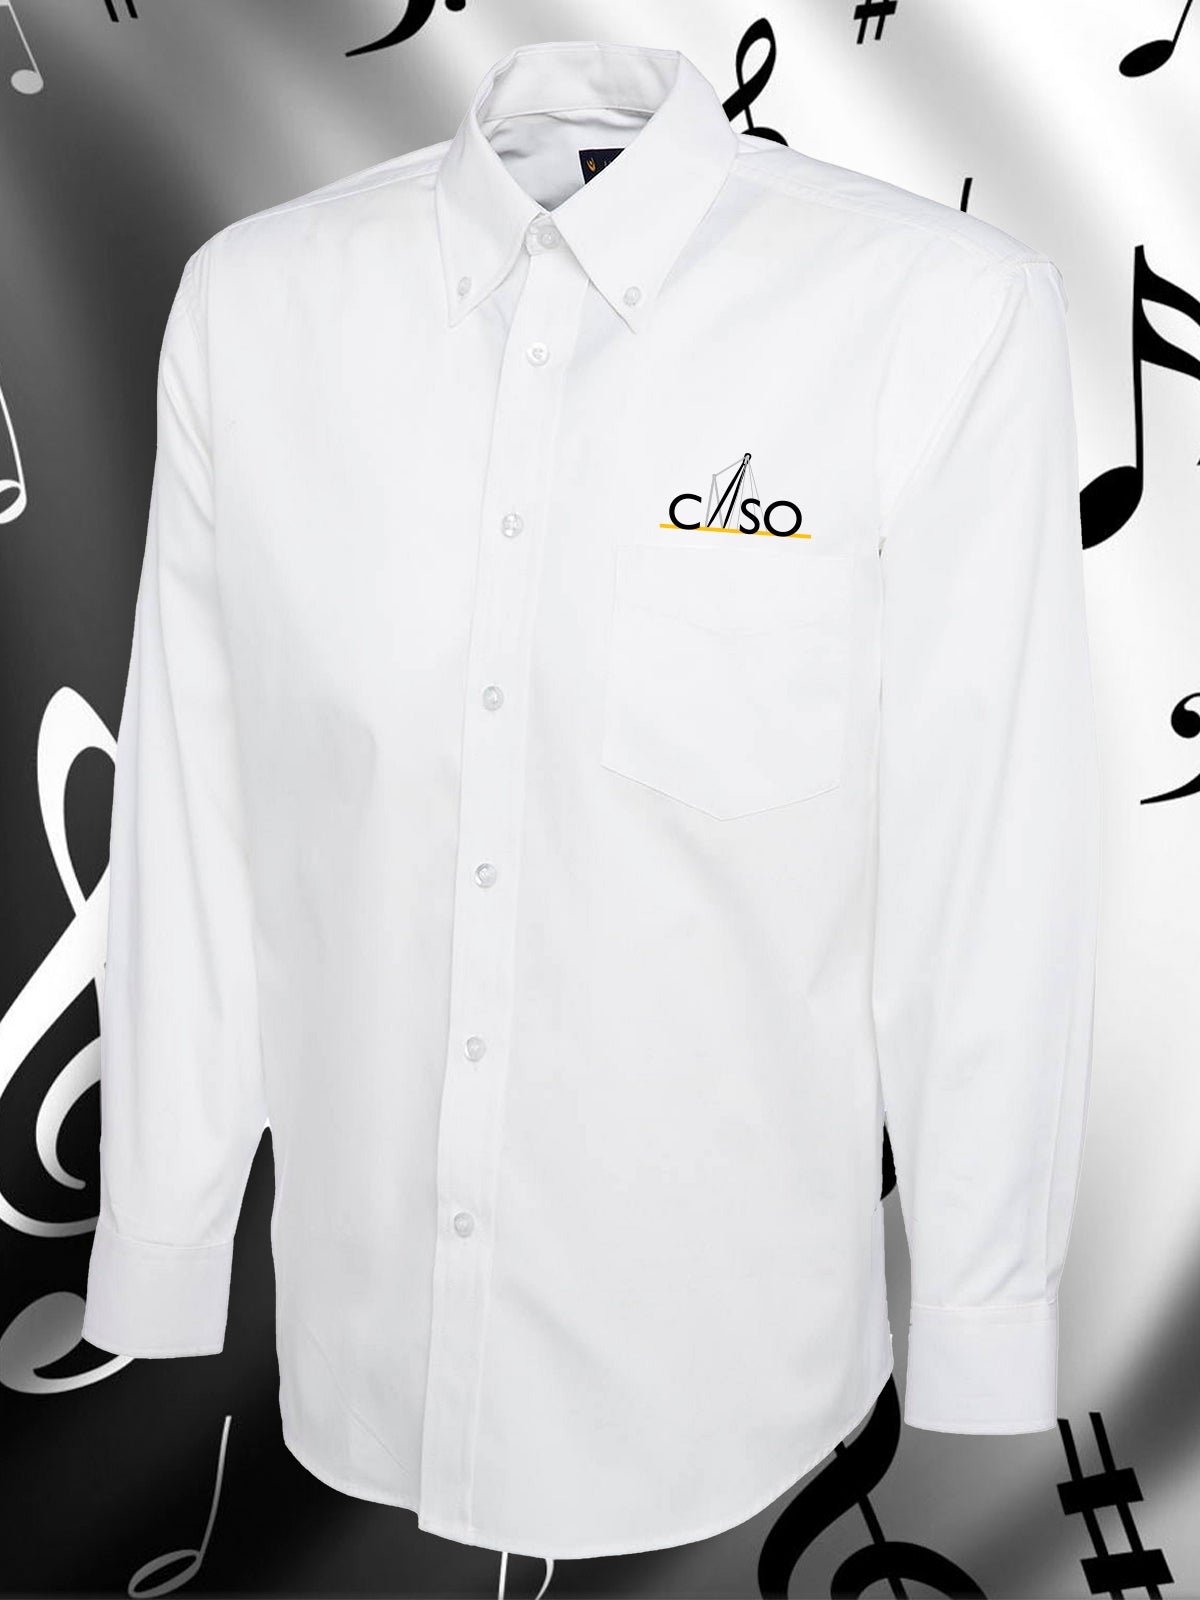 CNSO - UC701 White Long Sleeve Oxford Shirt